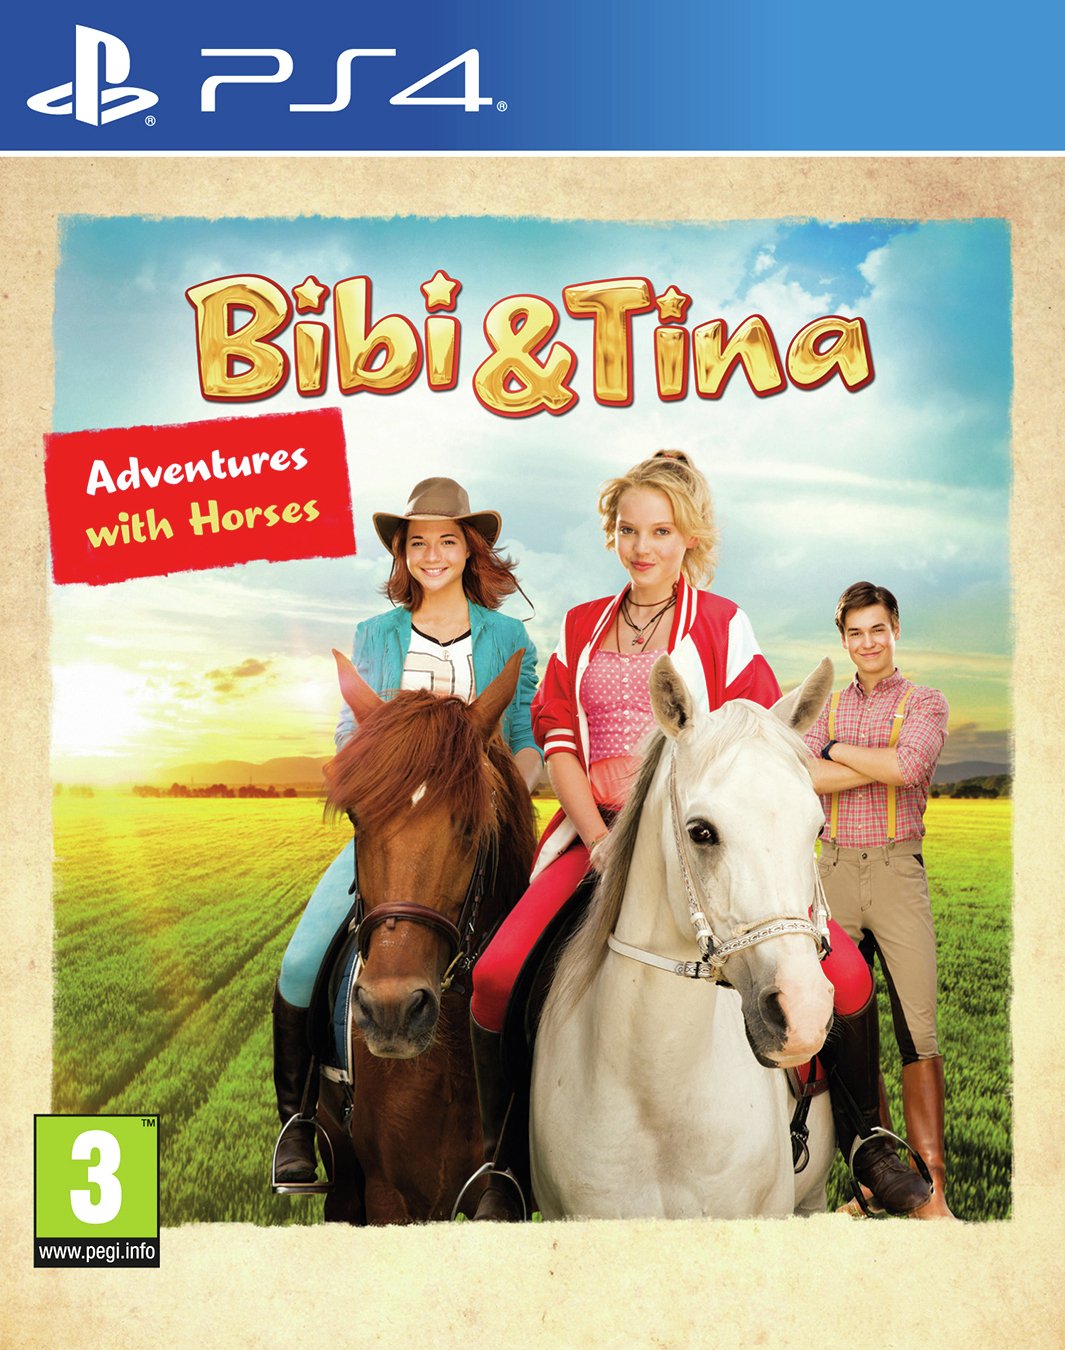 Bibi & Tina: Adventures with Horses PS4 Game Review